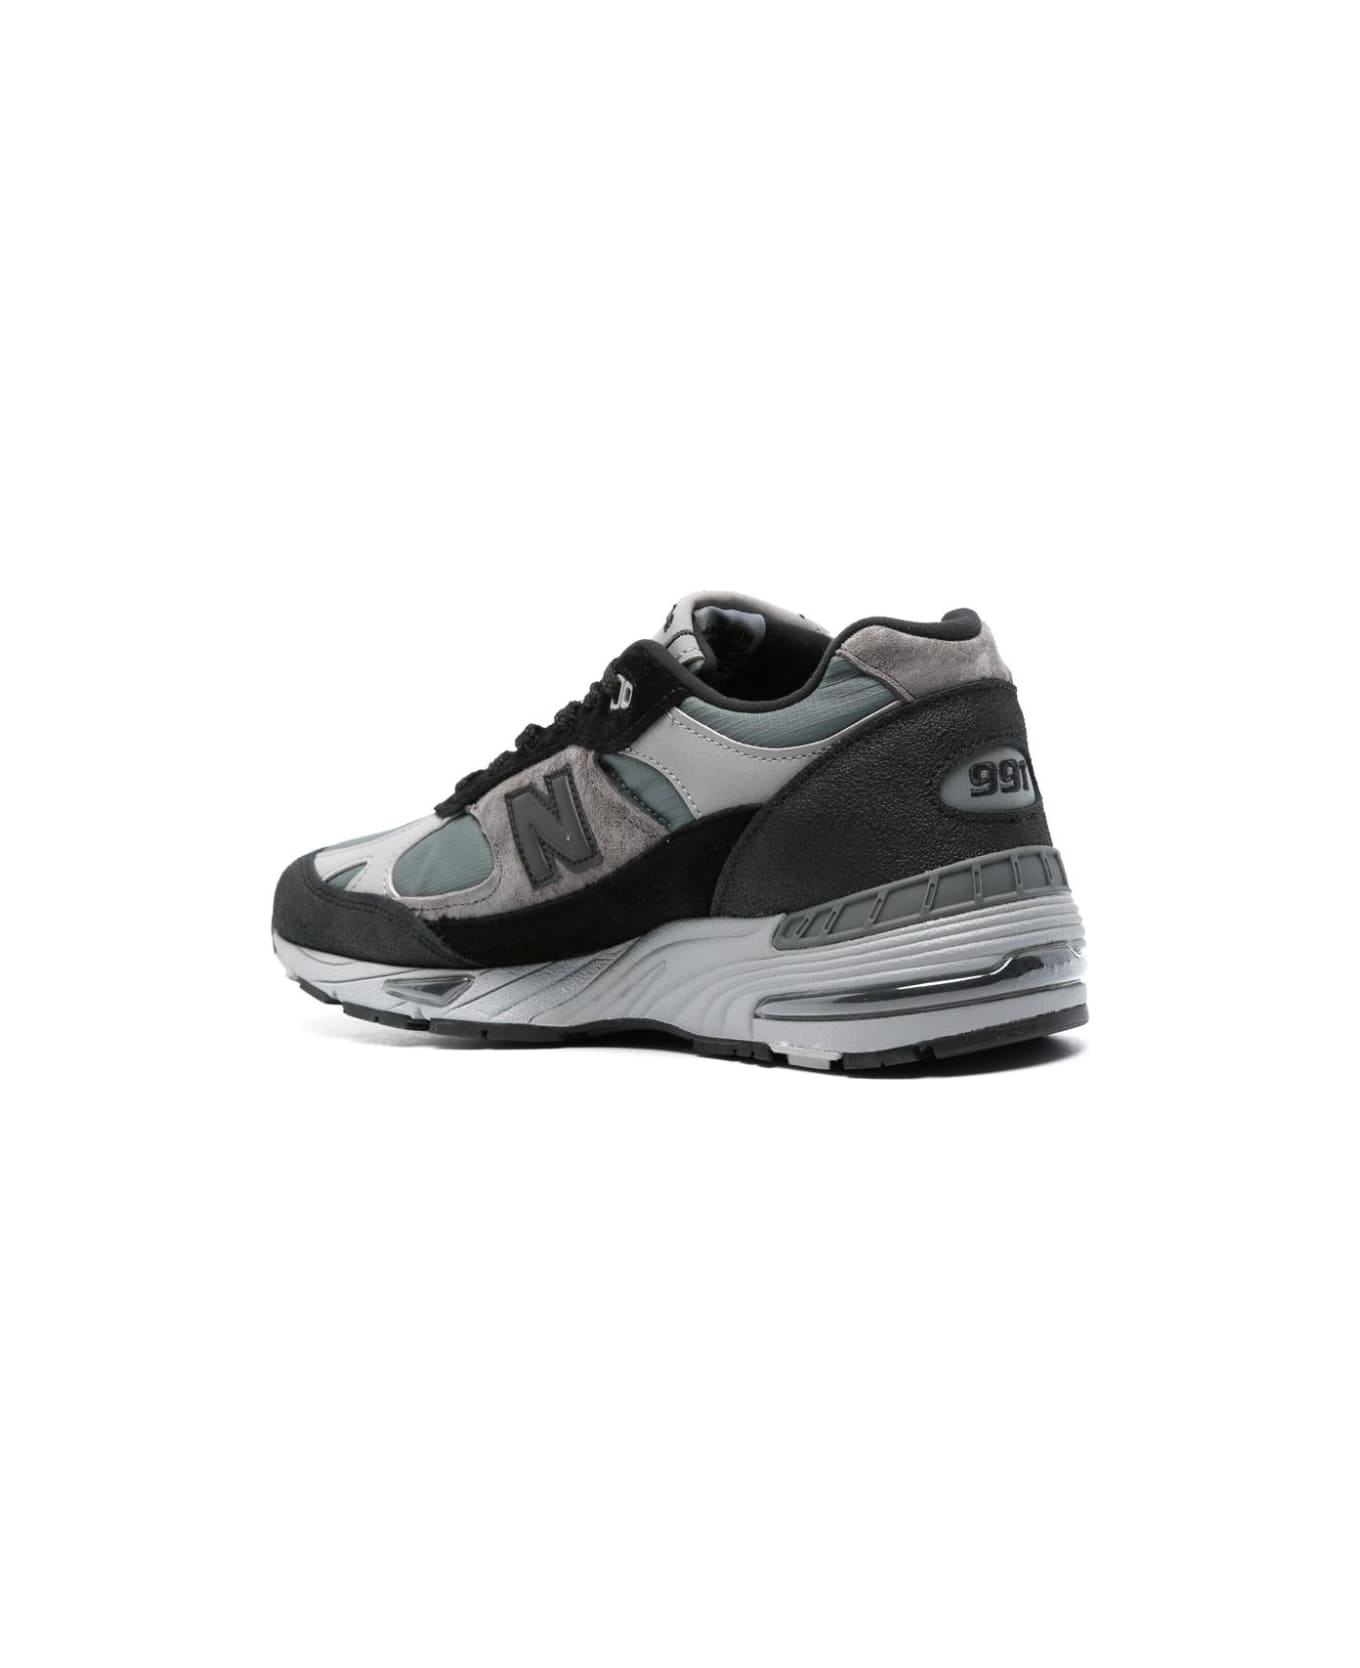 New Balance 991 Lifestyle Sneakers - Black Grey スニーカー